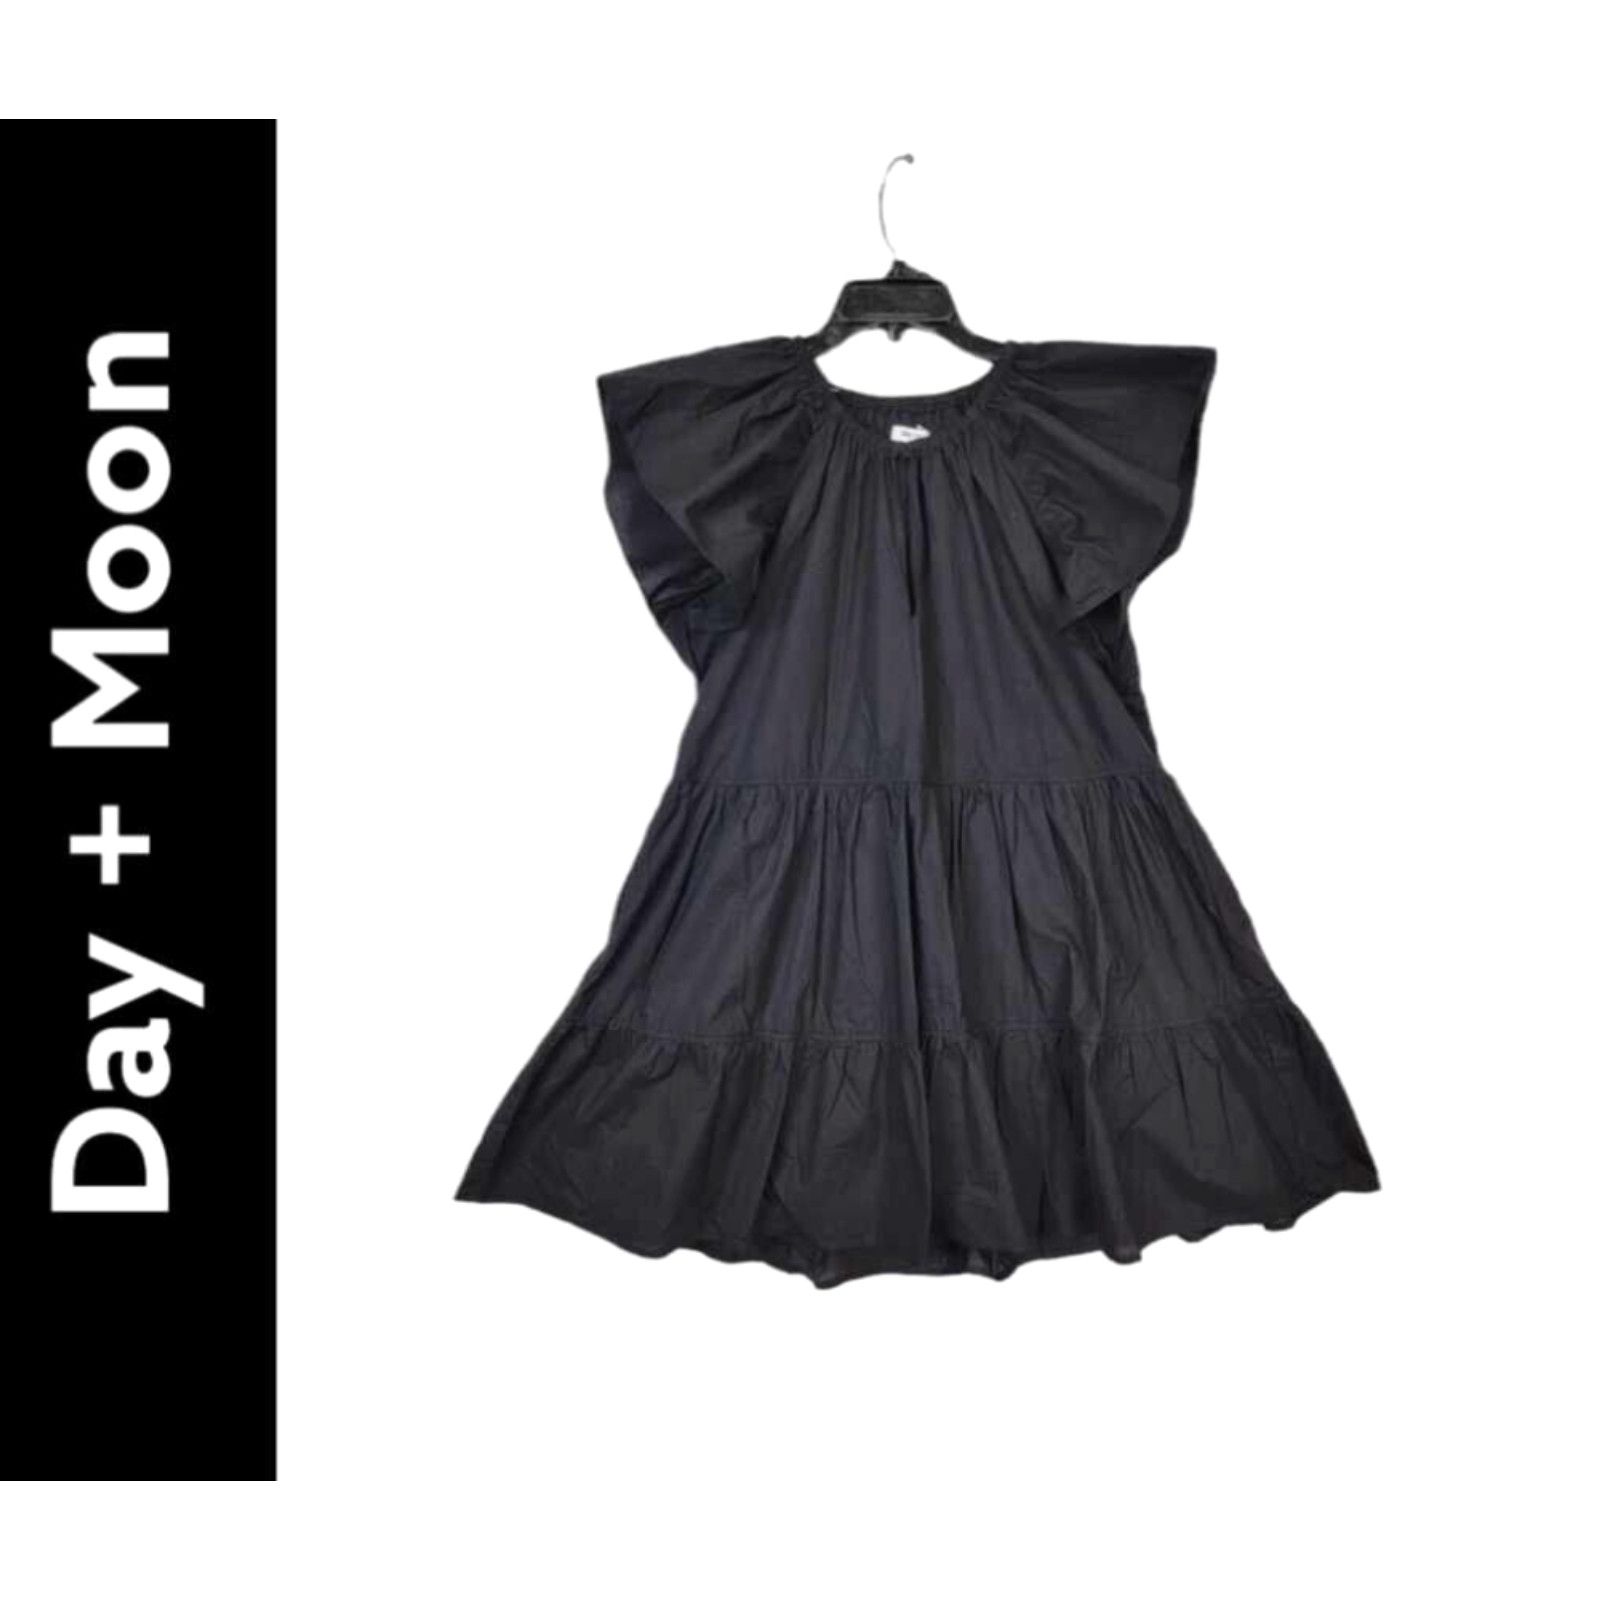 Vintage Day + Moon Women Medium Black Trapeze Flare Boho Dress Swing Short Sleeves Size M / US 6-8 / IT 42-44 - 1 Preview